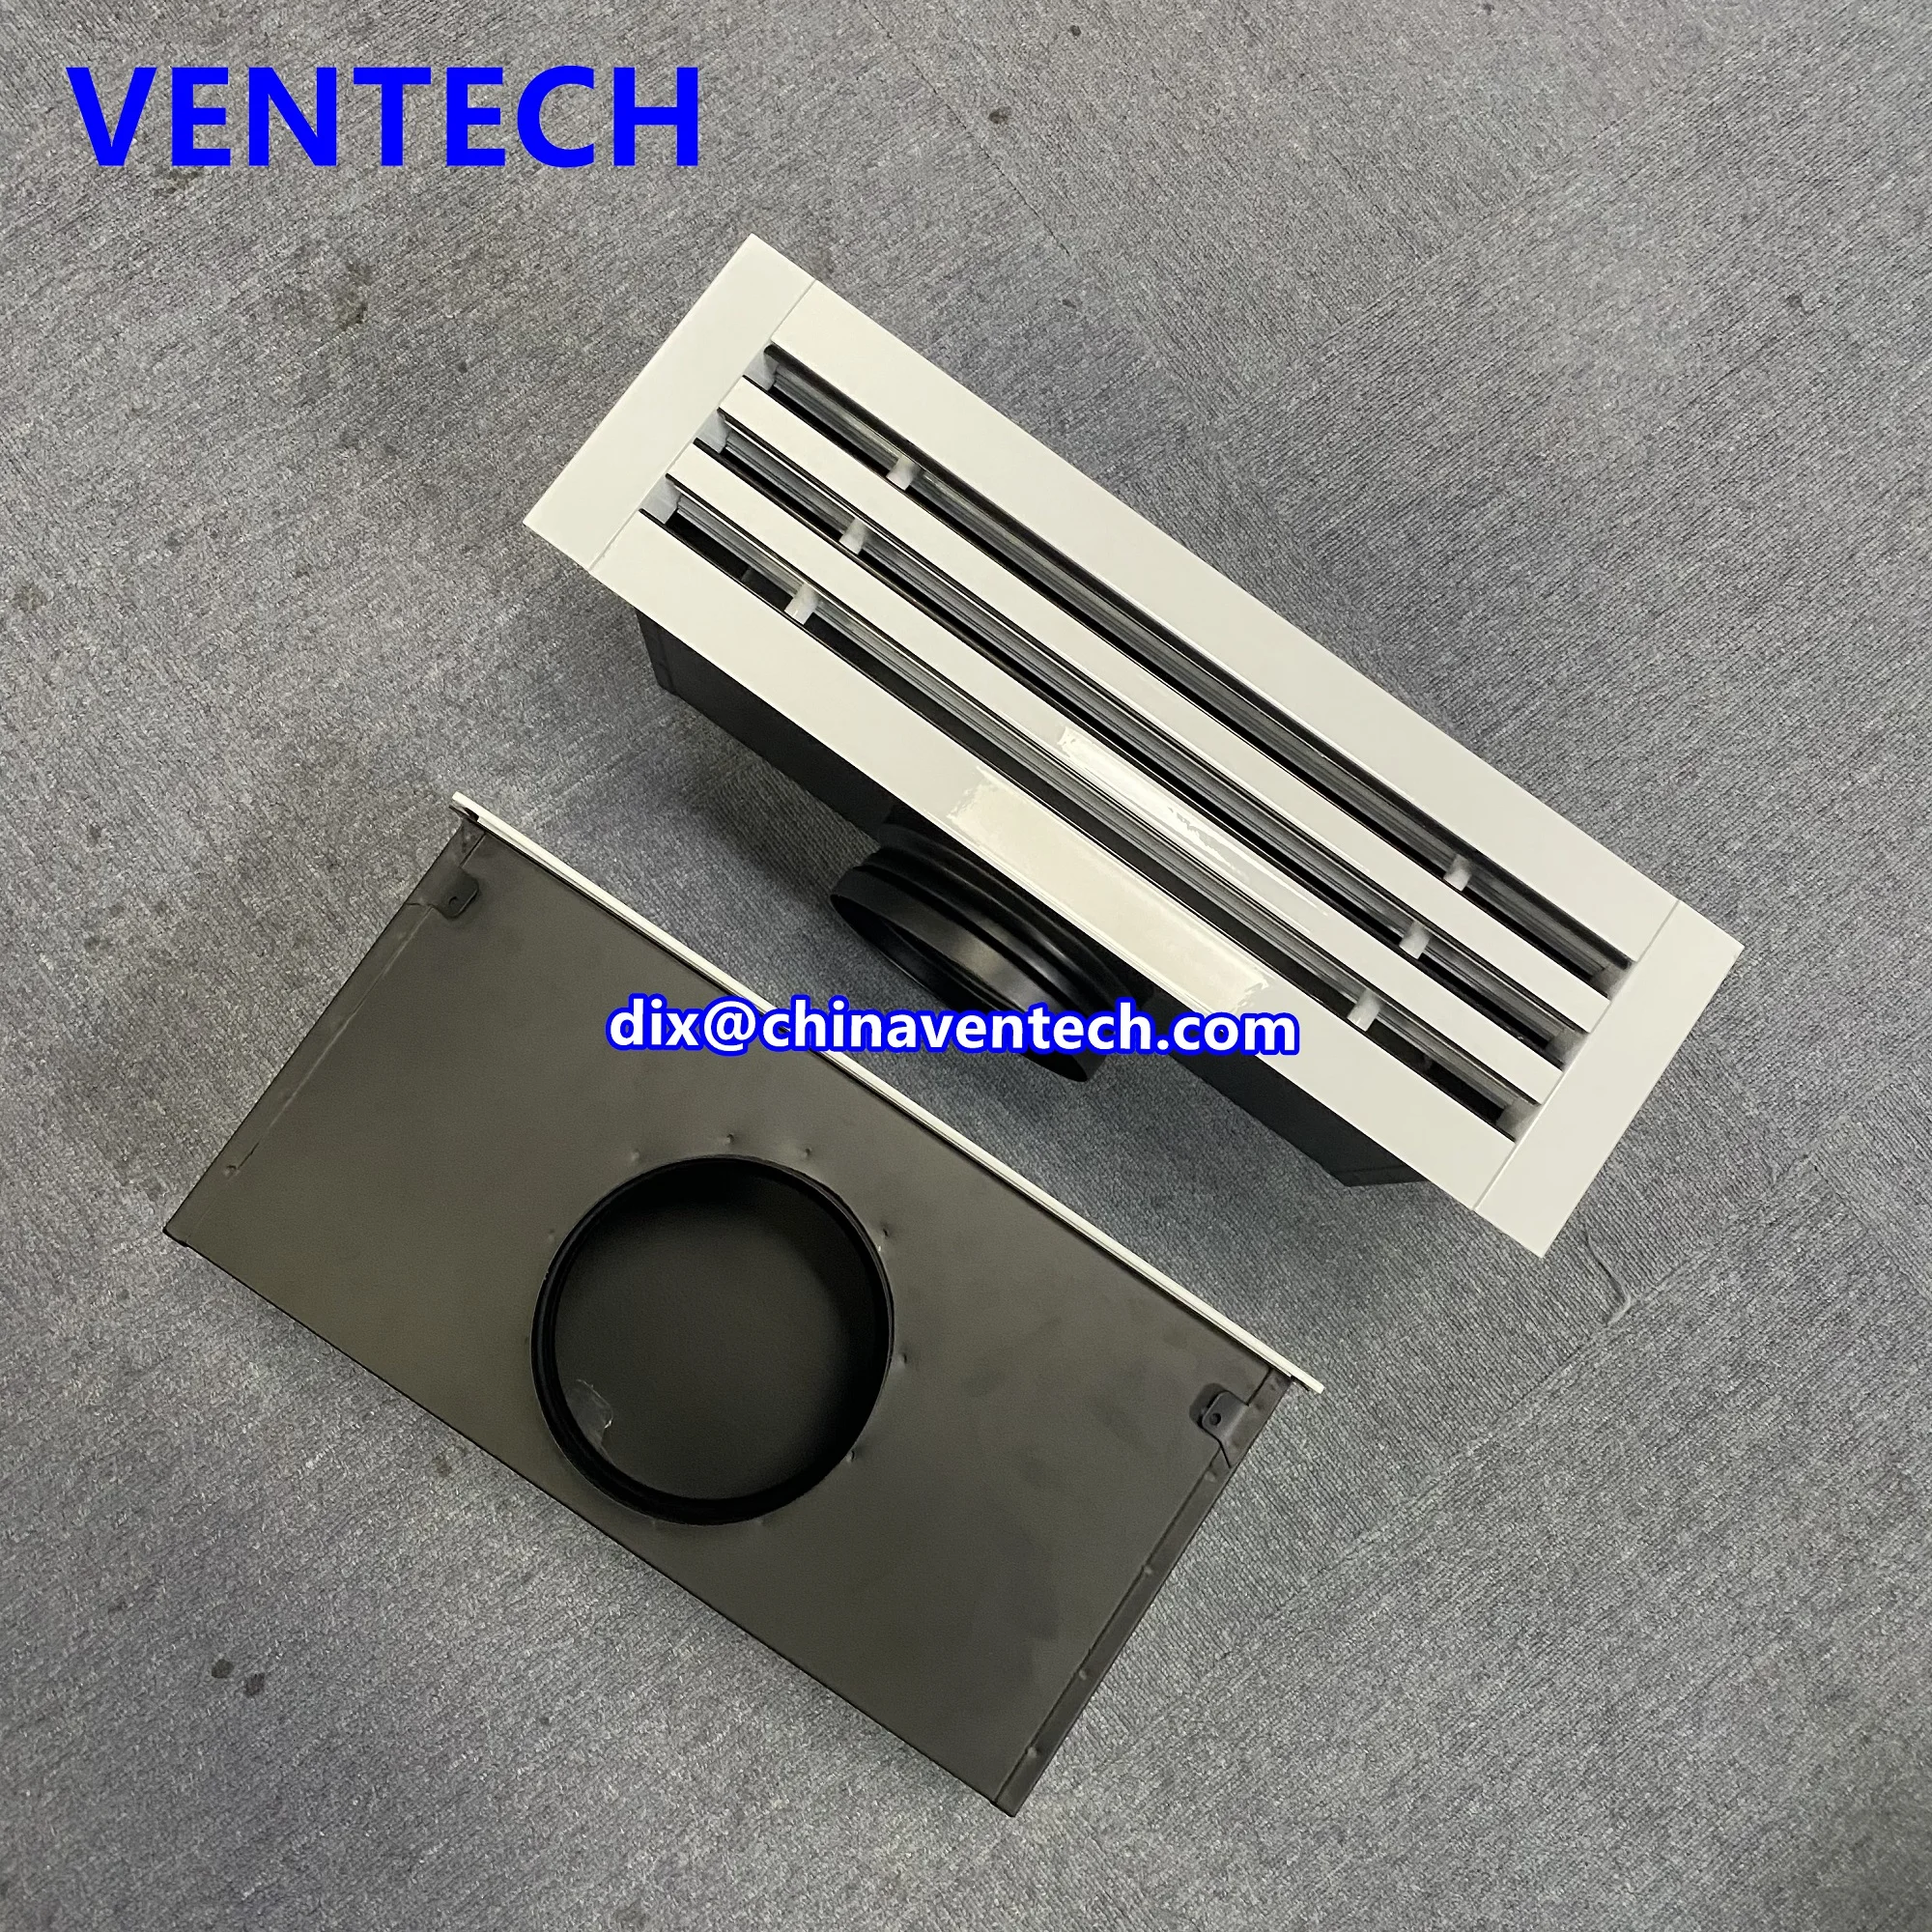 Hvac Round Air Duct Insulation Plenum Box Supply Air Vent Linear Slot Diffuser